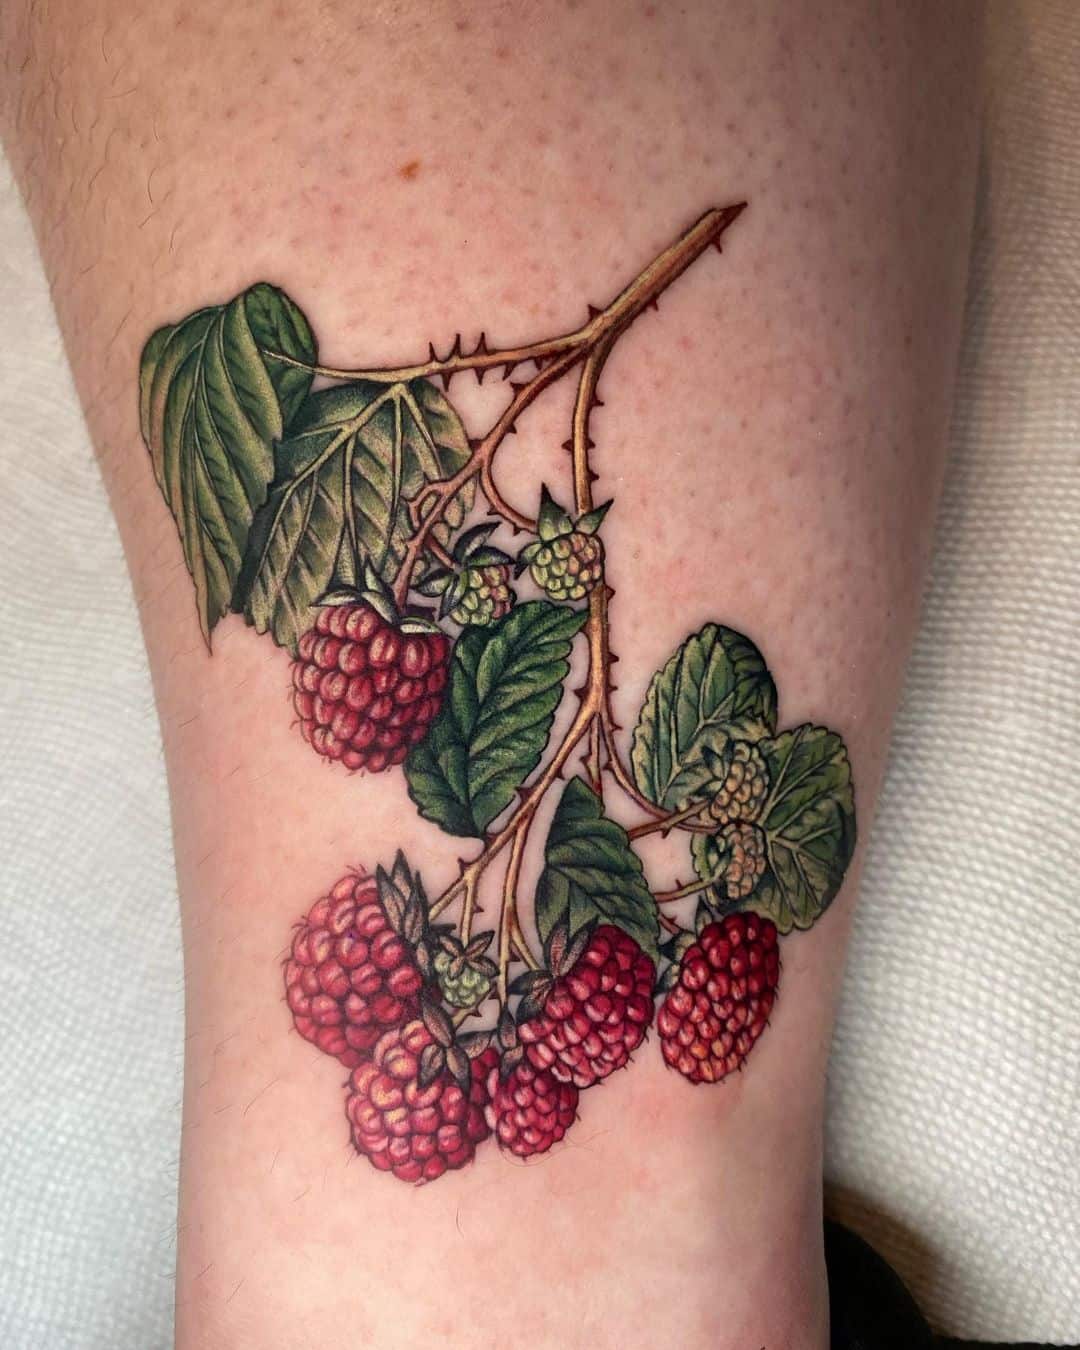 Fruit tattooby sjilohivyrose